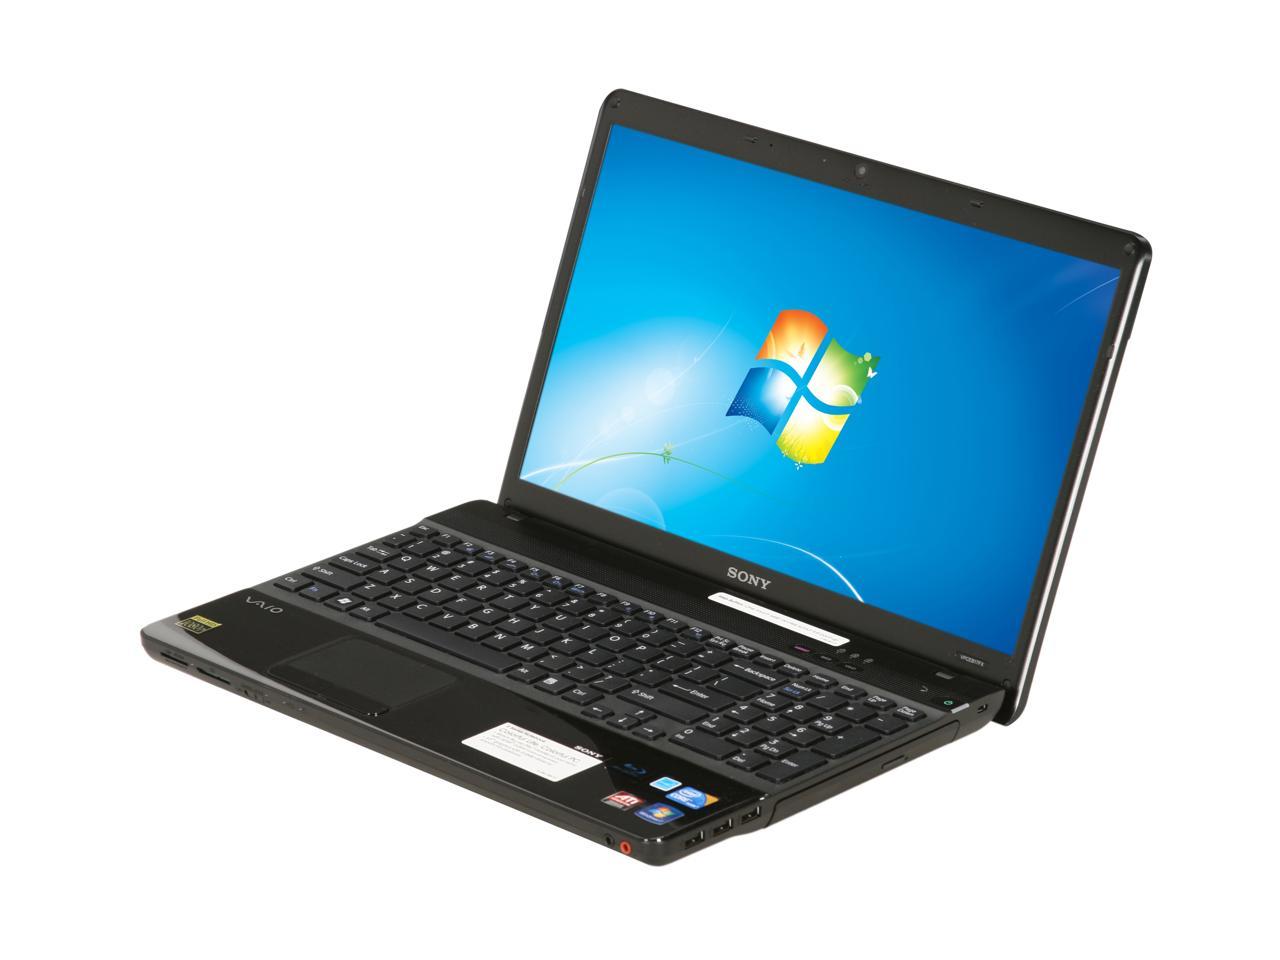 SONY Laptop VAIO E Series Intel Core i3 1st Gen 330M (2.13GHz) 4GB 